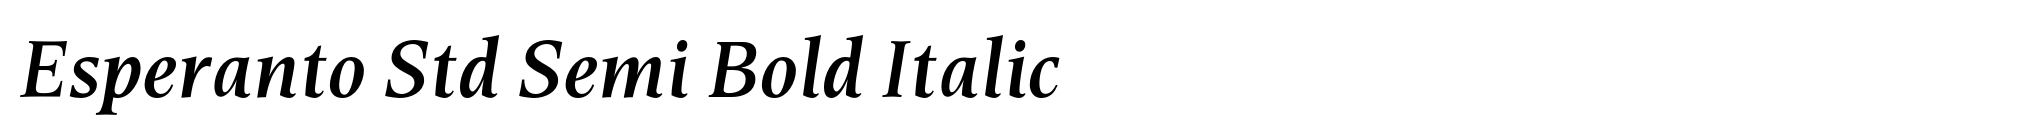 Esperanto Std Semi Bold Italic image